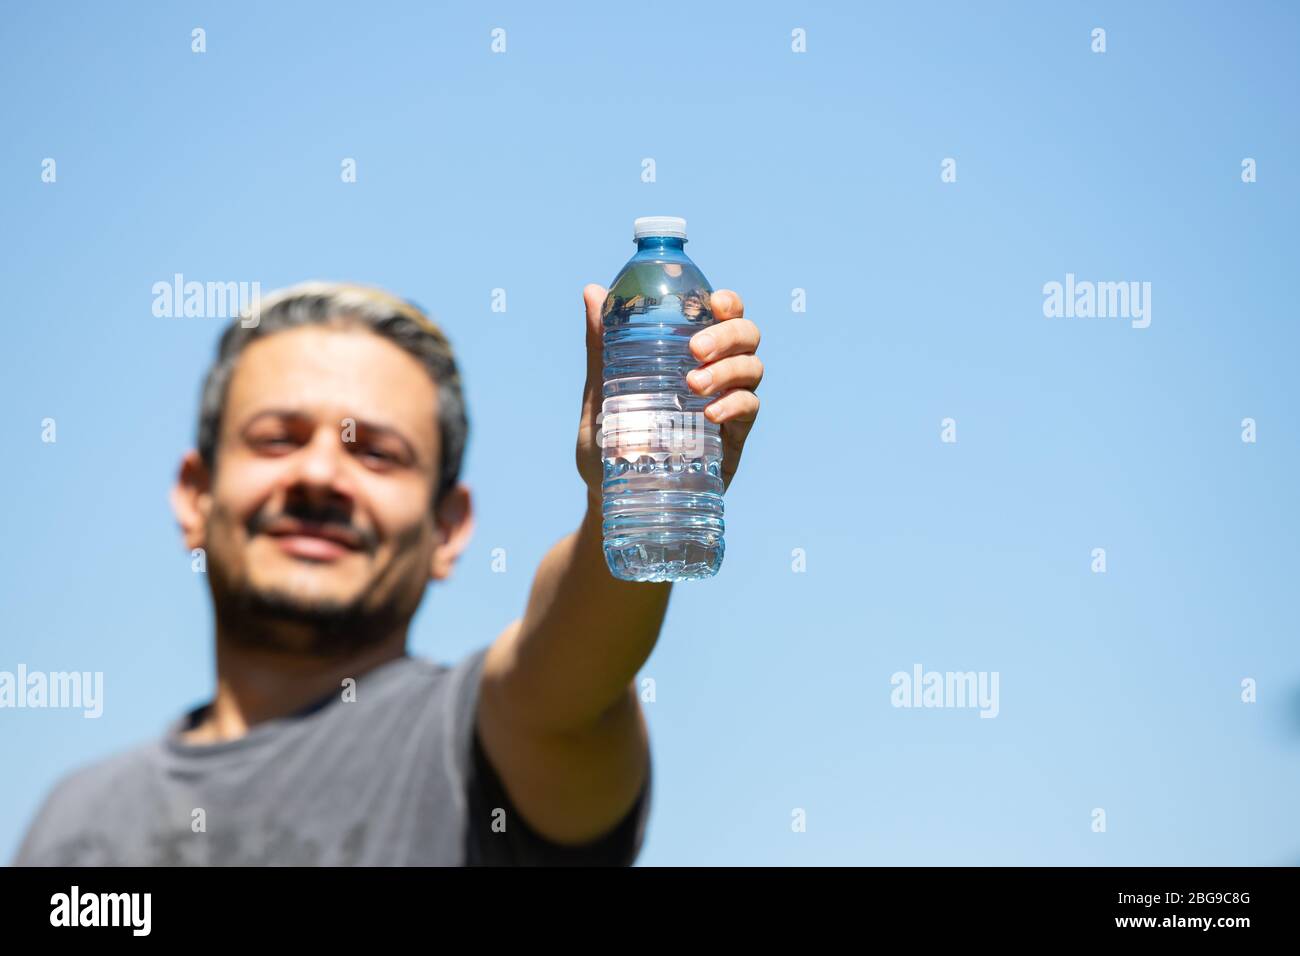 https://c8.alamy.com/comp/2BG9C8G/happy-man-holding-up-a-clear-water-bottle-against-a-blue-sky-background-2BG9C8G.jpg